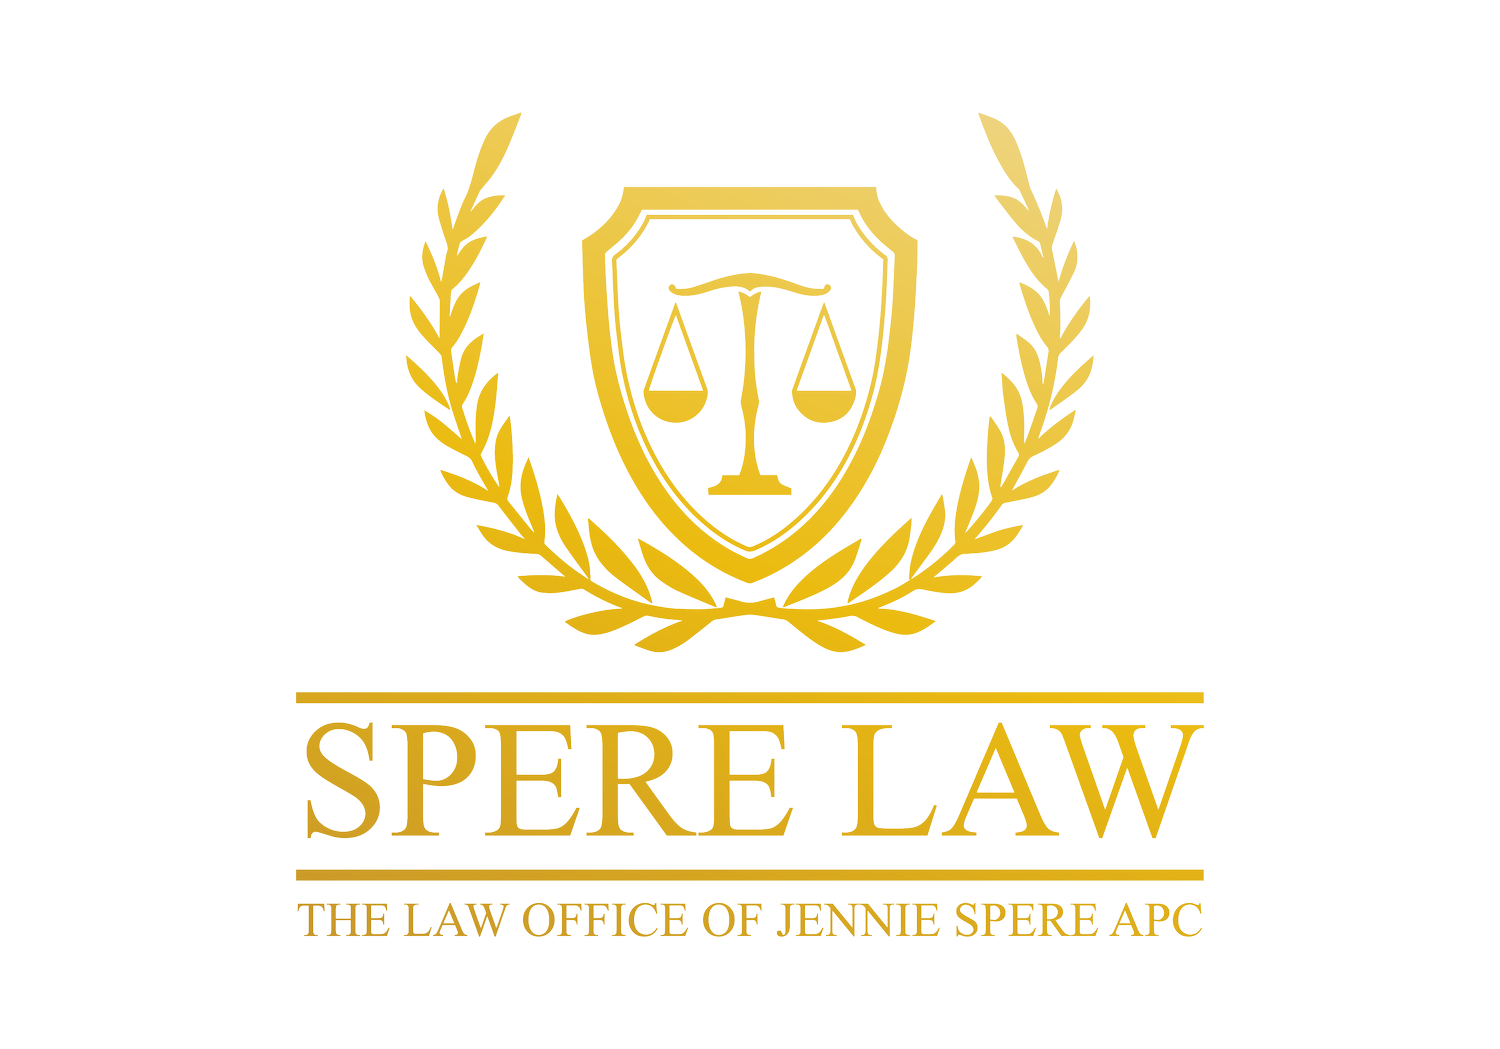 Law Office of Jennie Spere APC